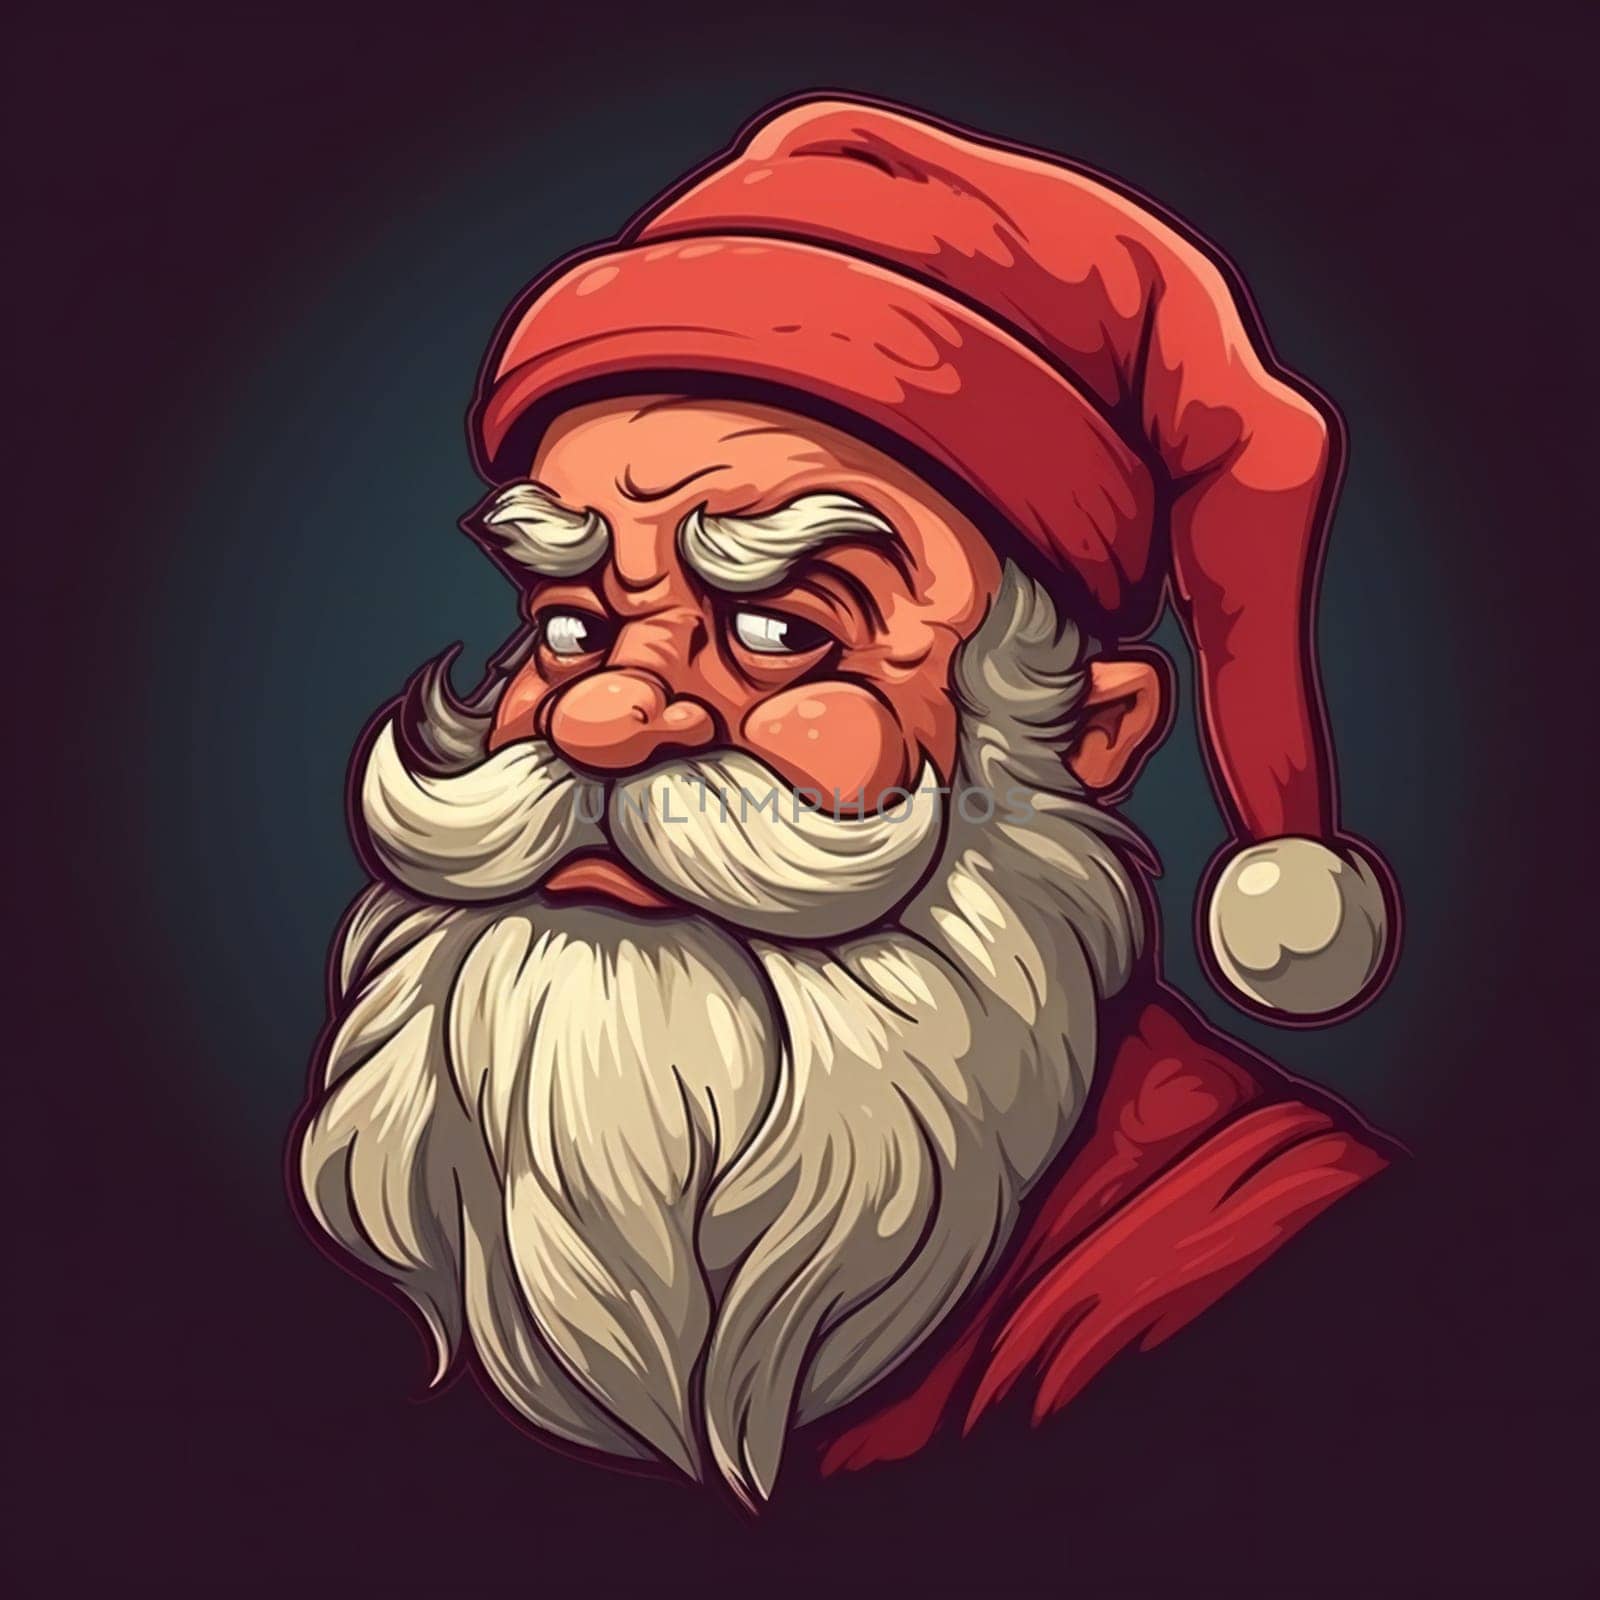 Santa Claus Portrait Illustration, Christmas Art, Isolated serious